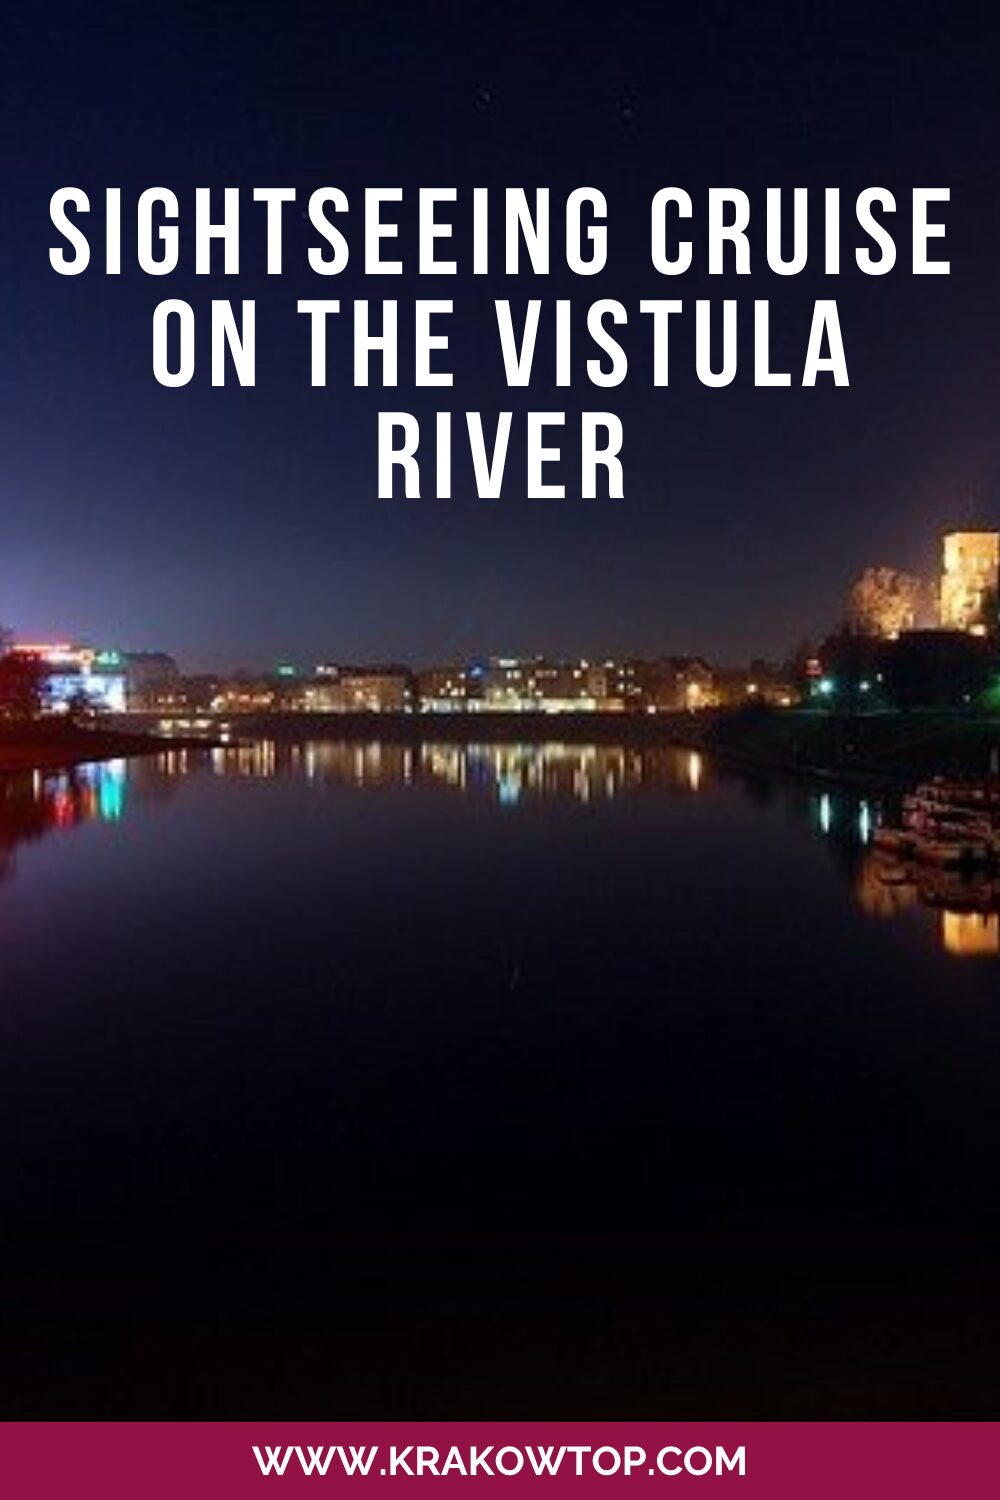 Sightseeing cruise along the Vistula River